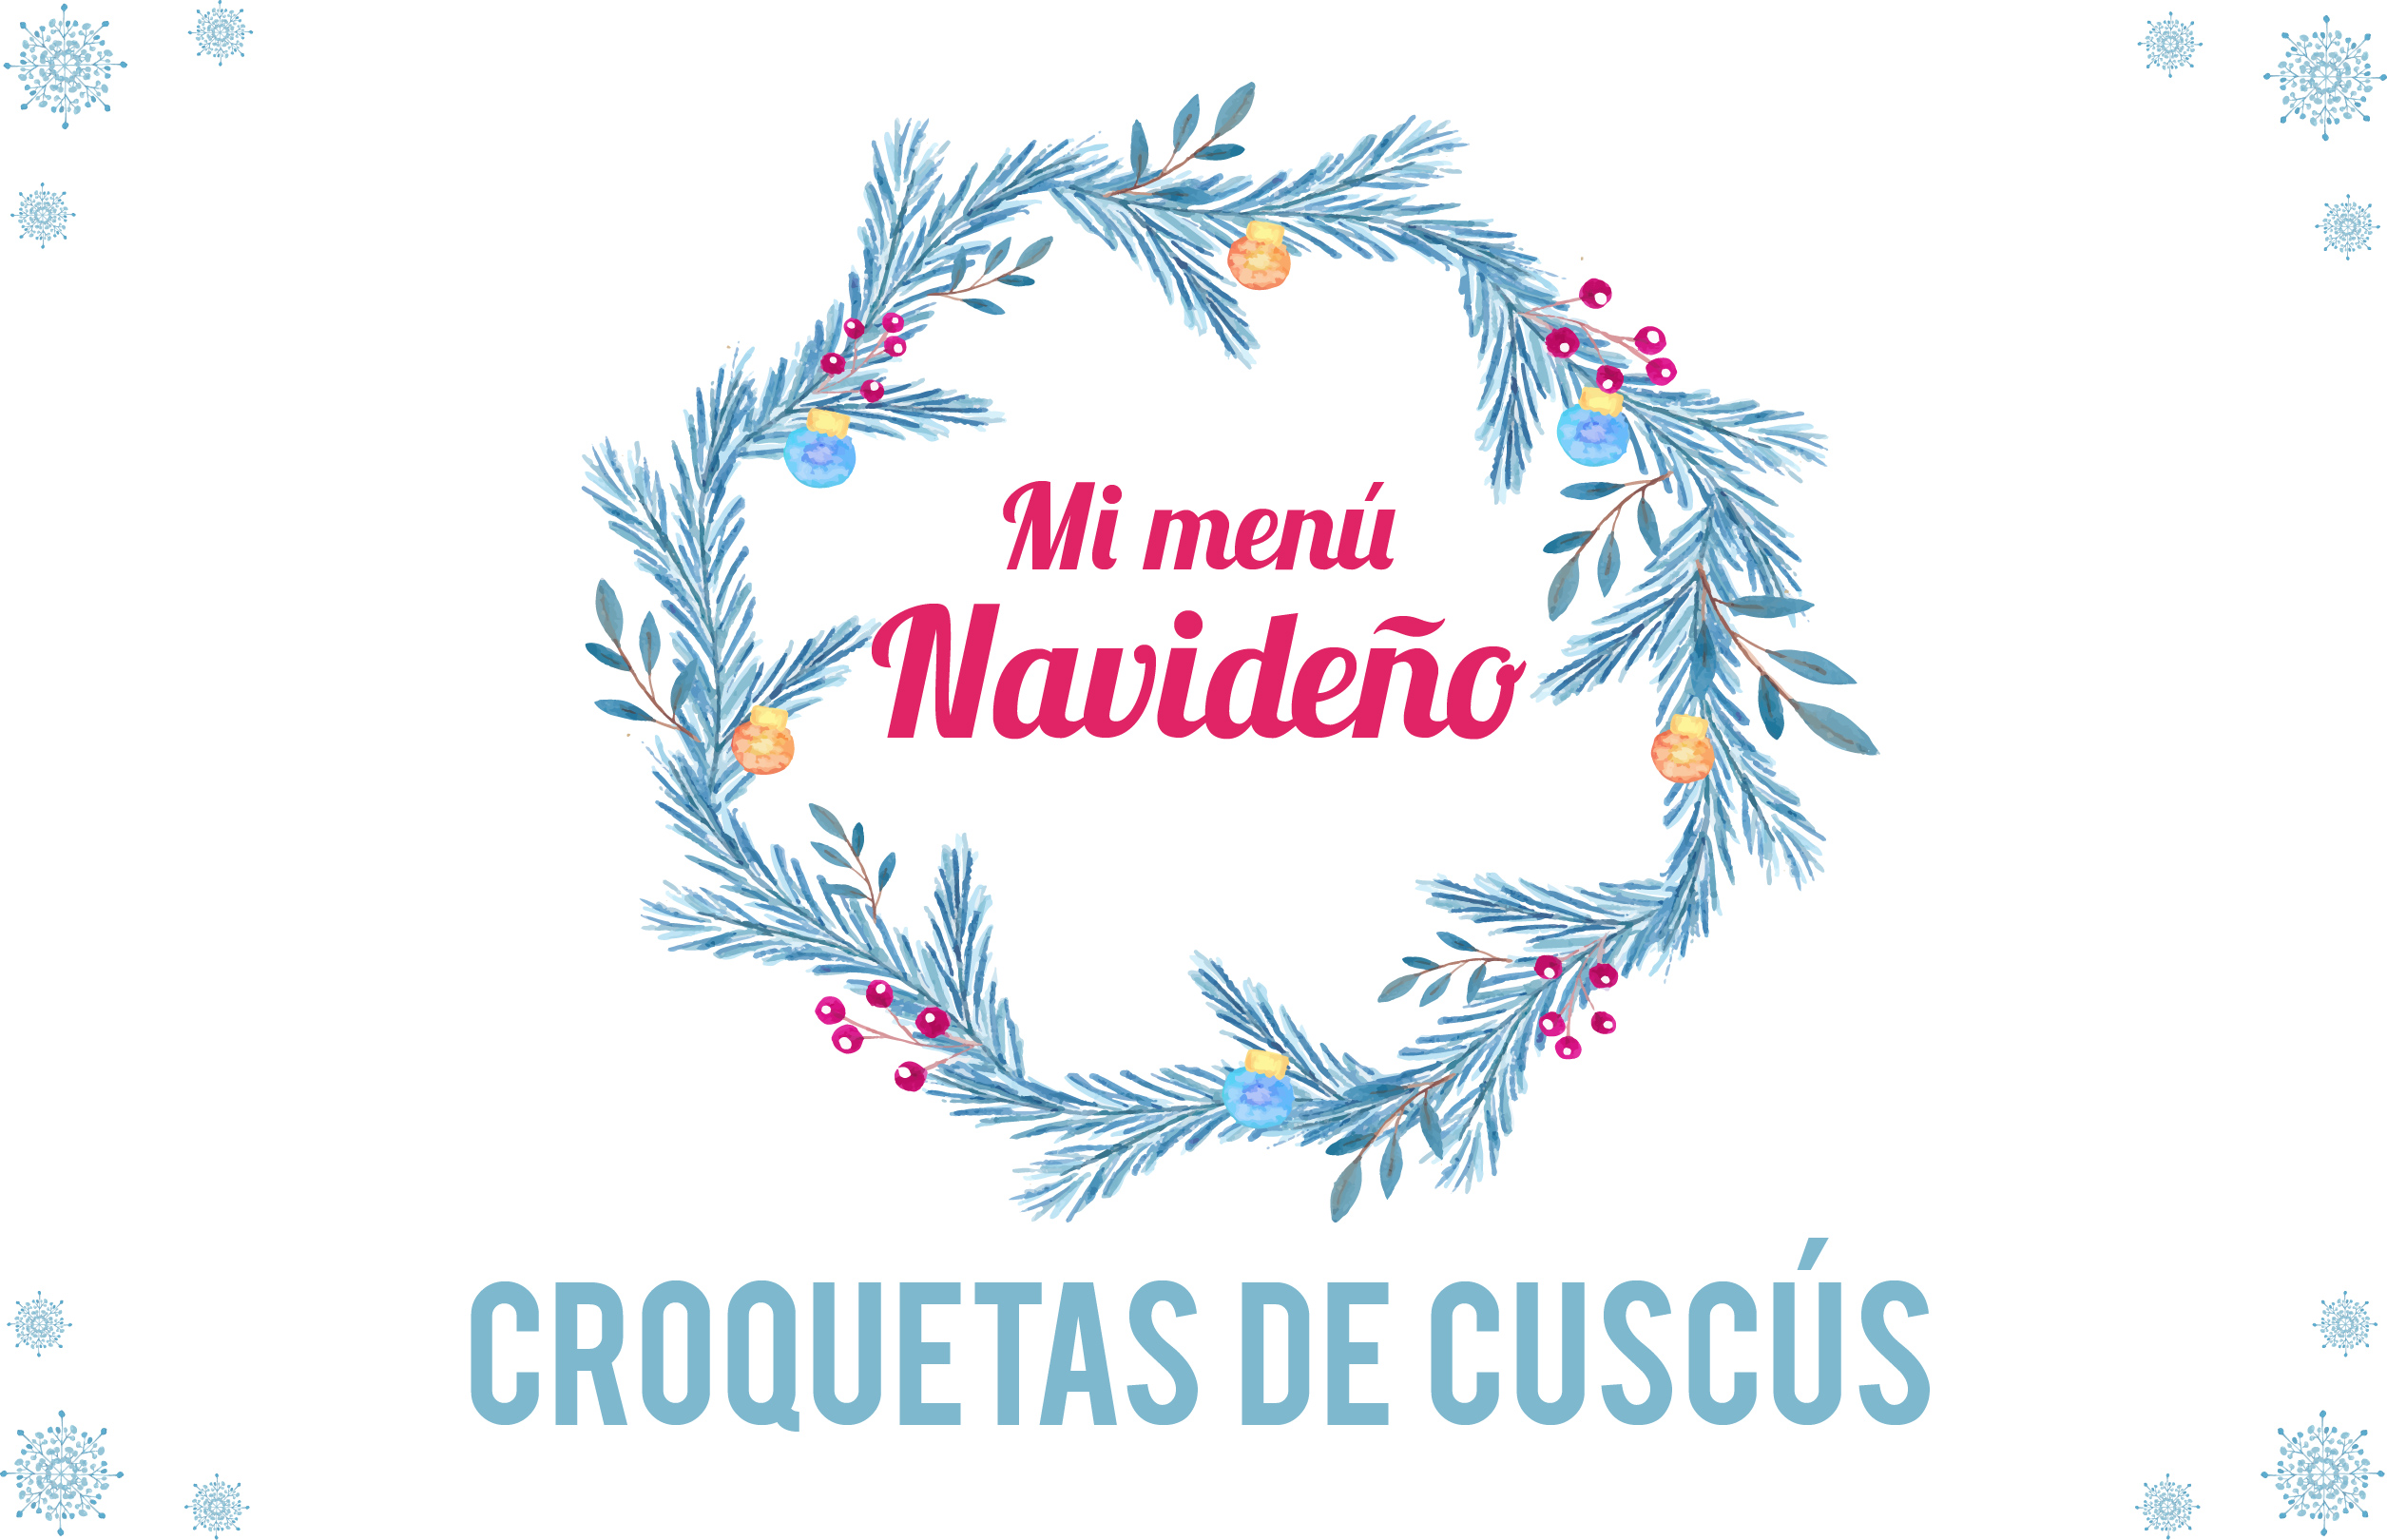 1croquetas-de-cuscus